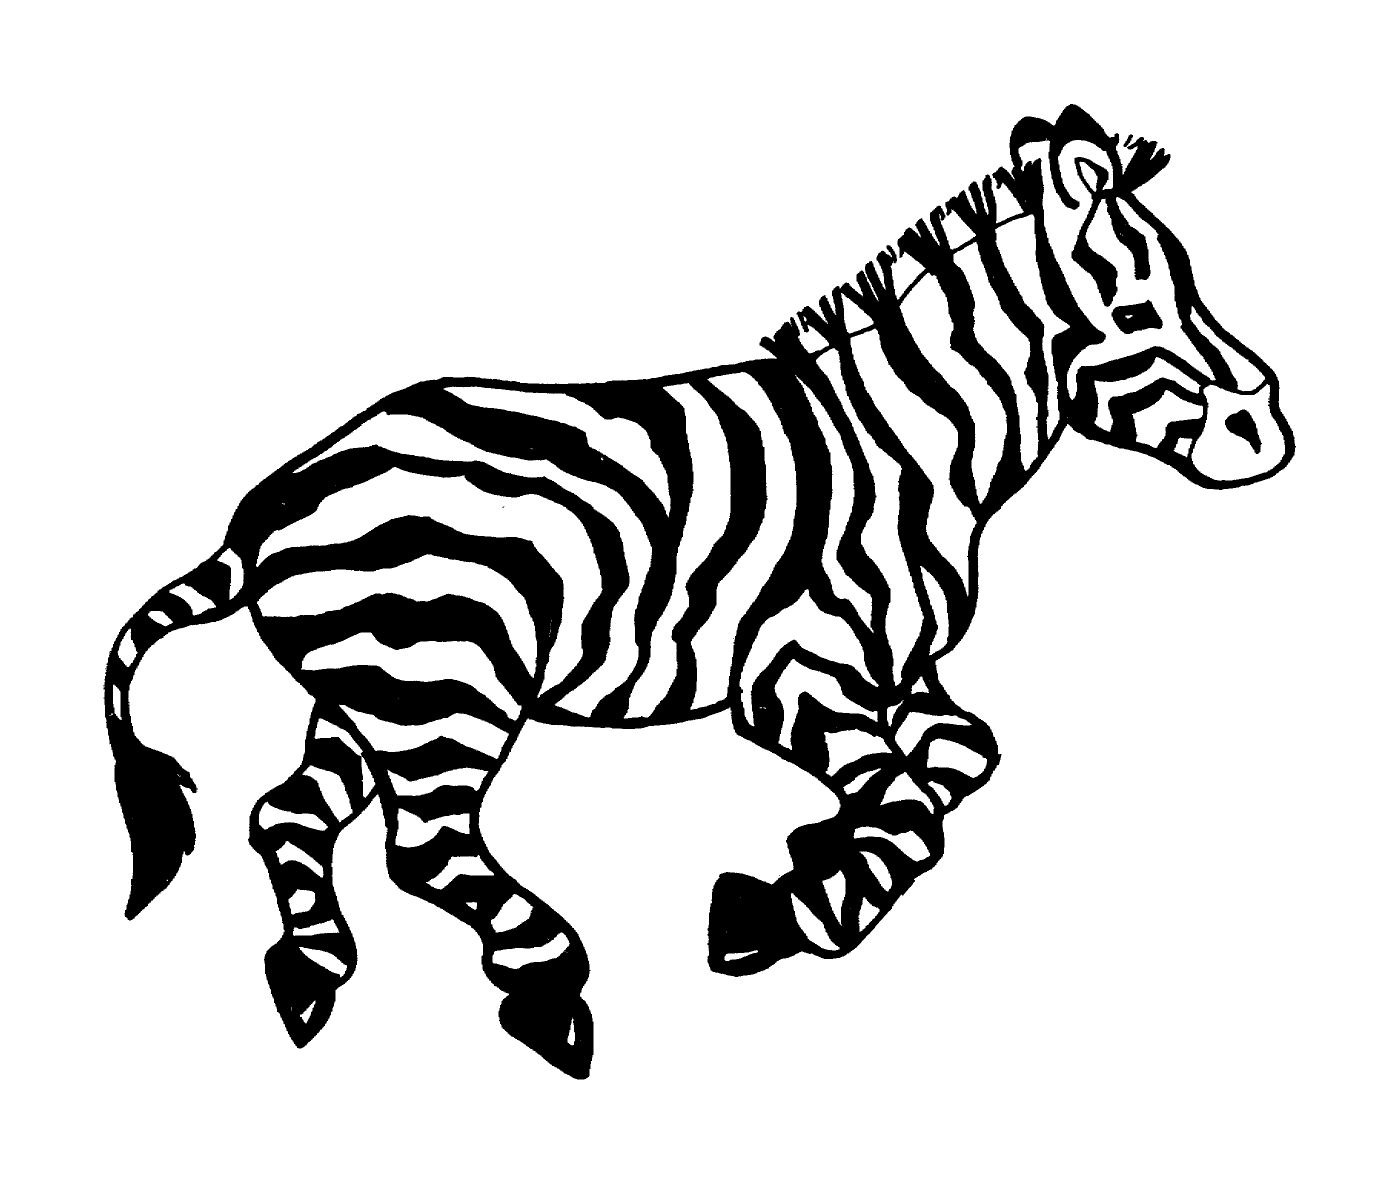  Elegante y majestuoso Zebra 